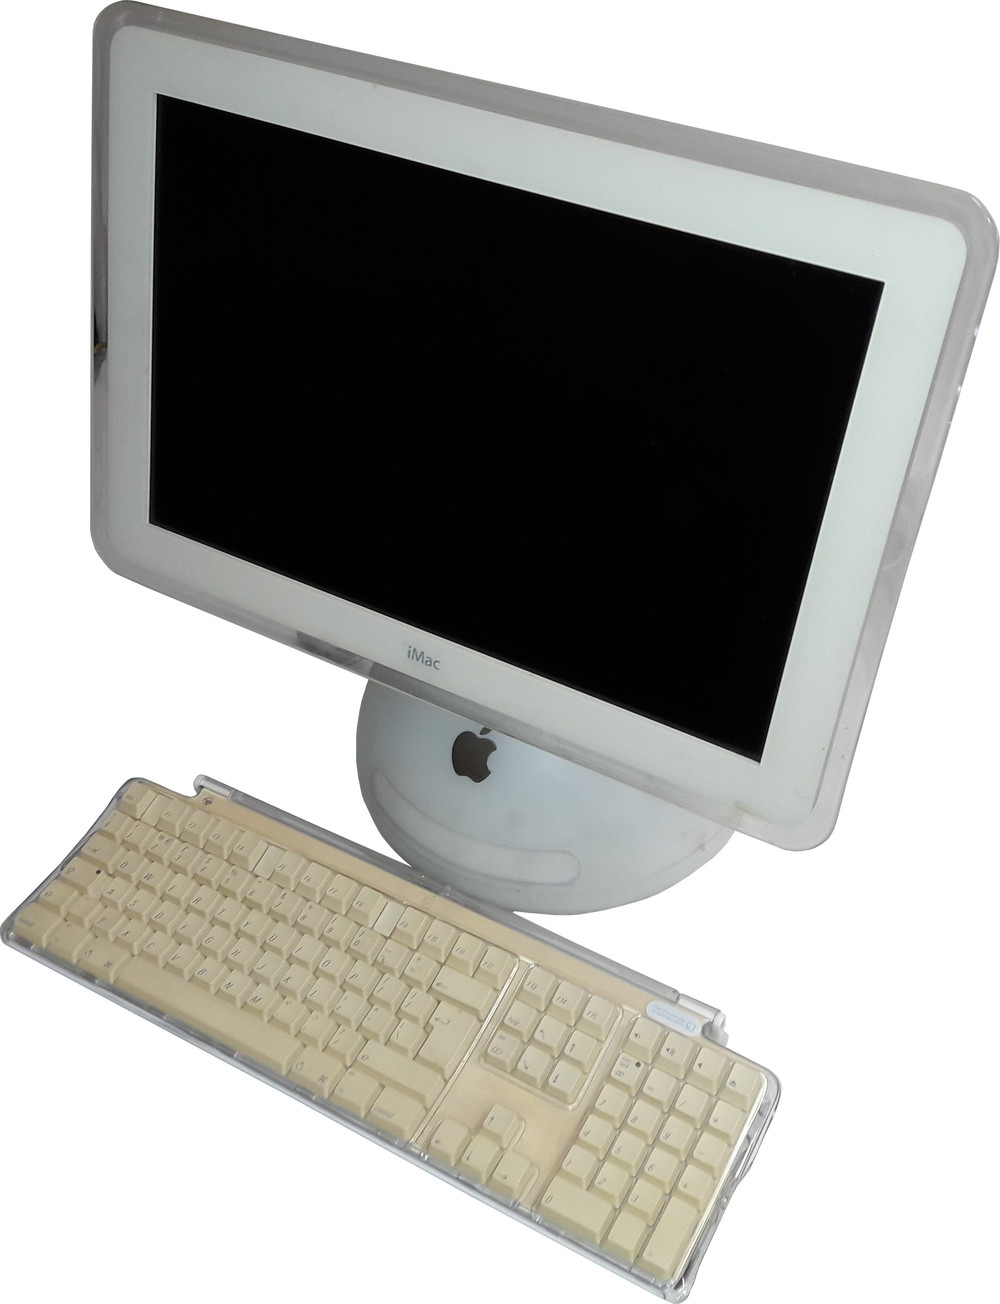 Apple iMac G4 17 